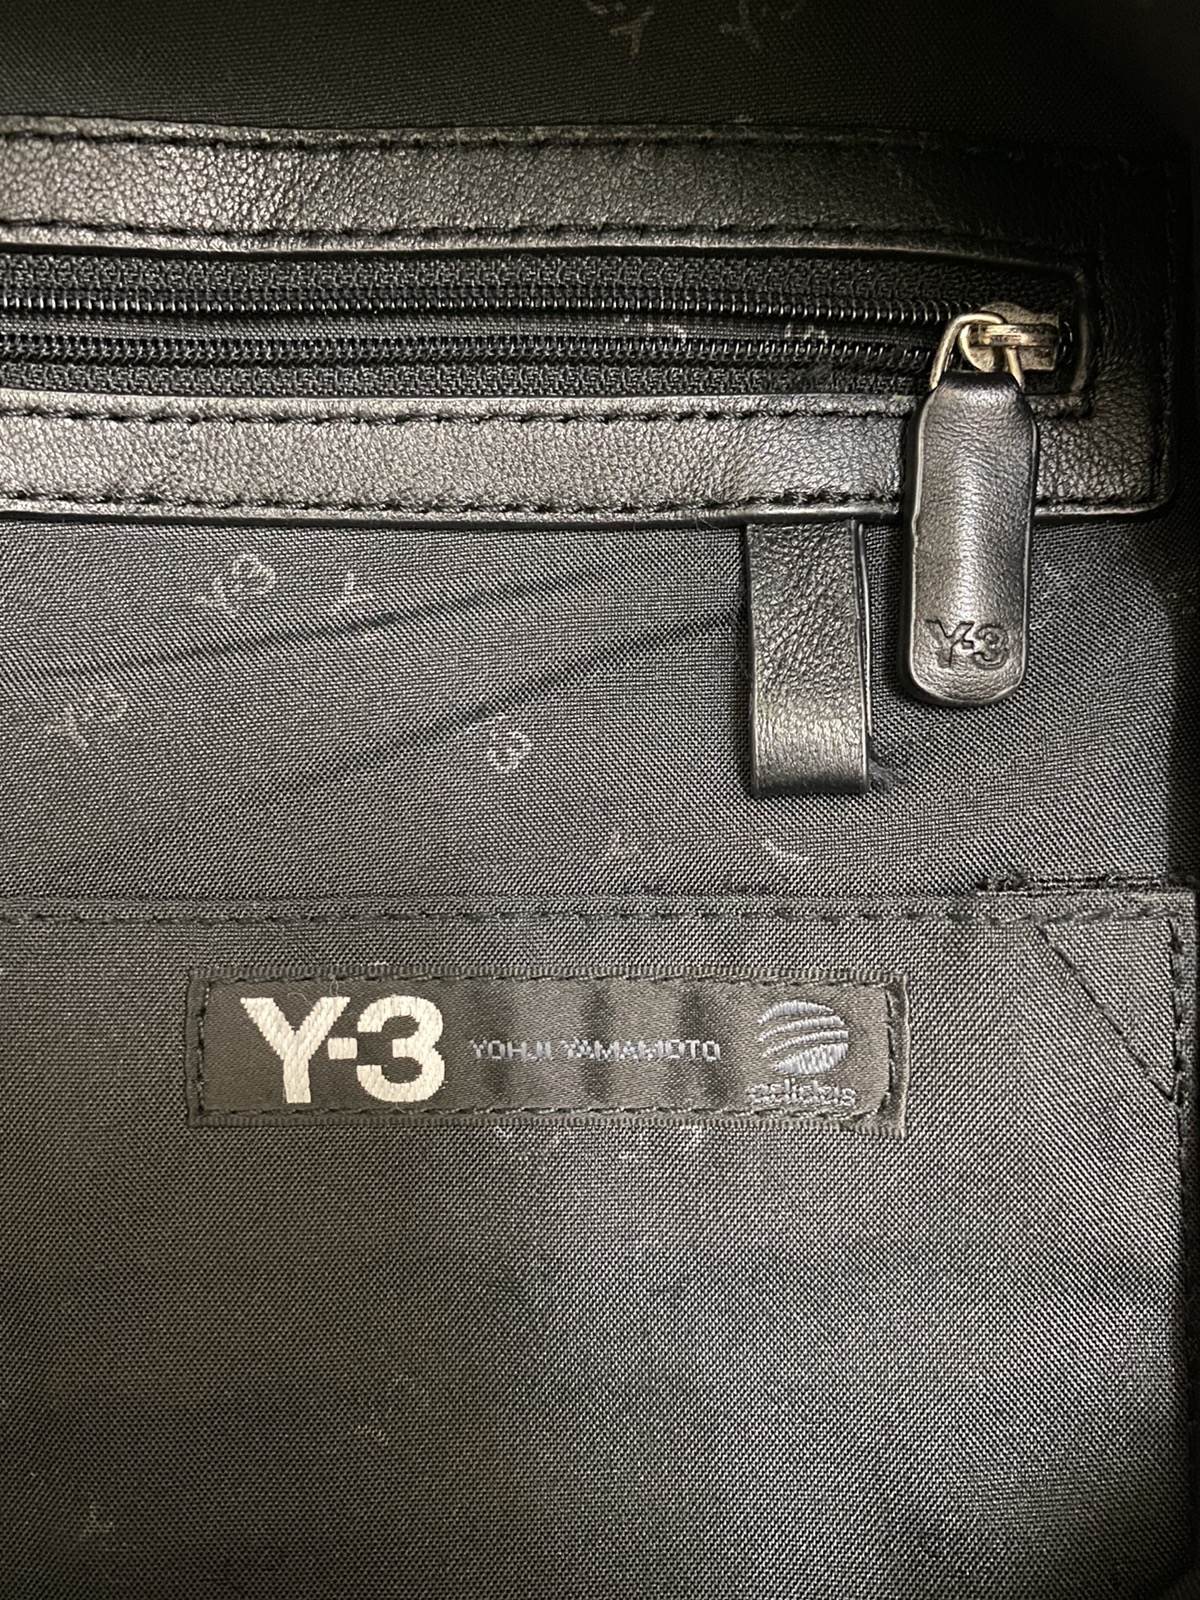 DISTRESSED Y-3 ADIDAS YOHJI YAMAMOTO BAG - 12